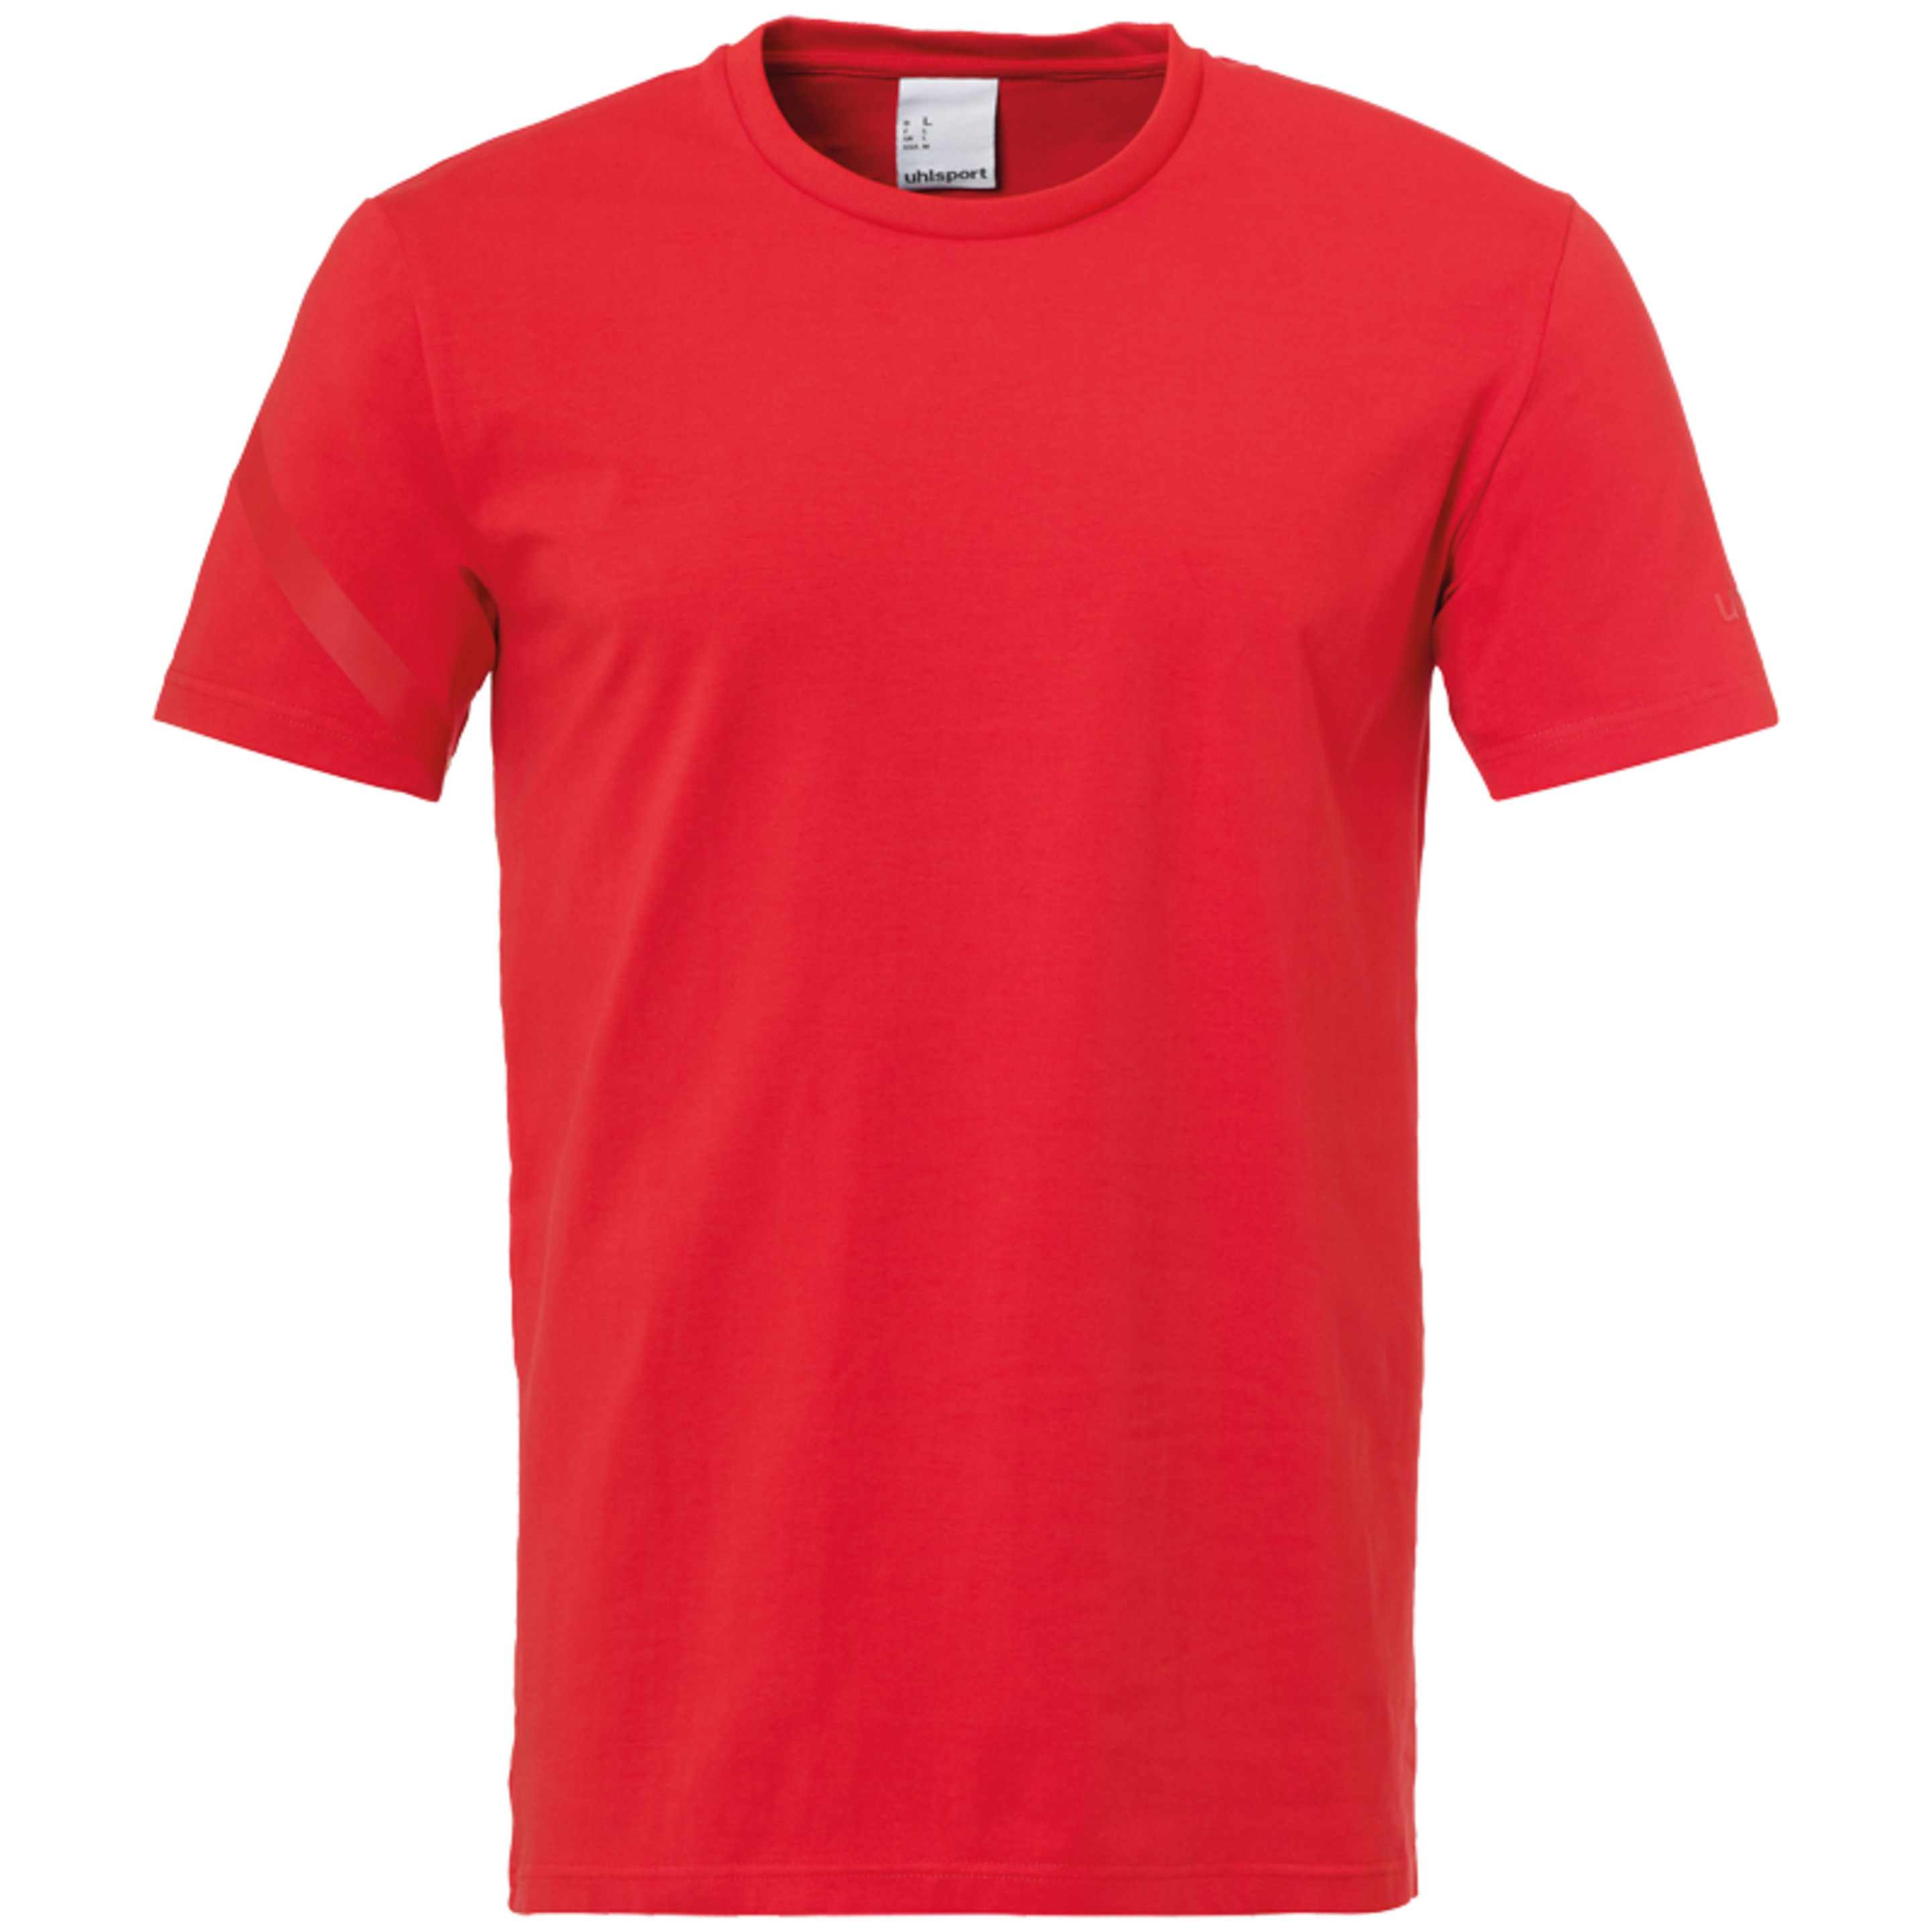 Essential Pro Shirt Red Uhlsport - rojo - Essential Pro Shirt Red Uhlsport  MKP